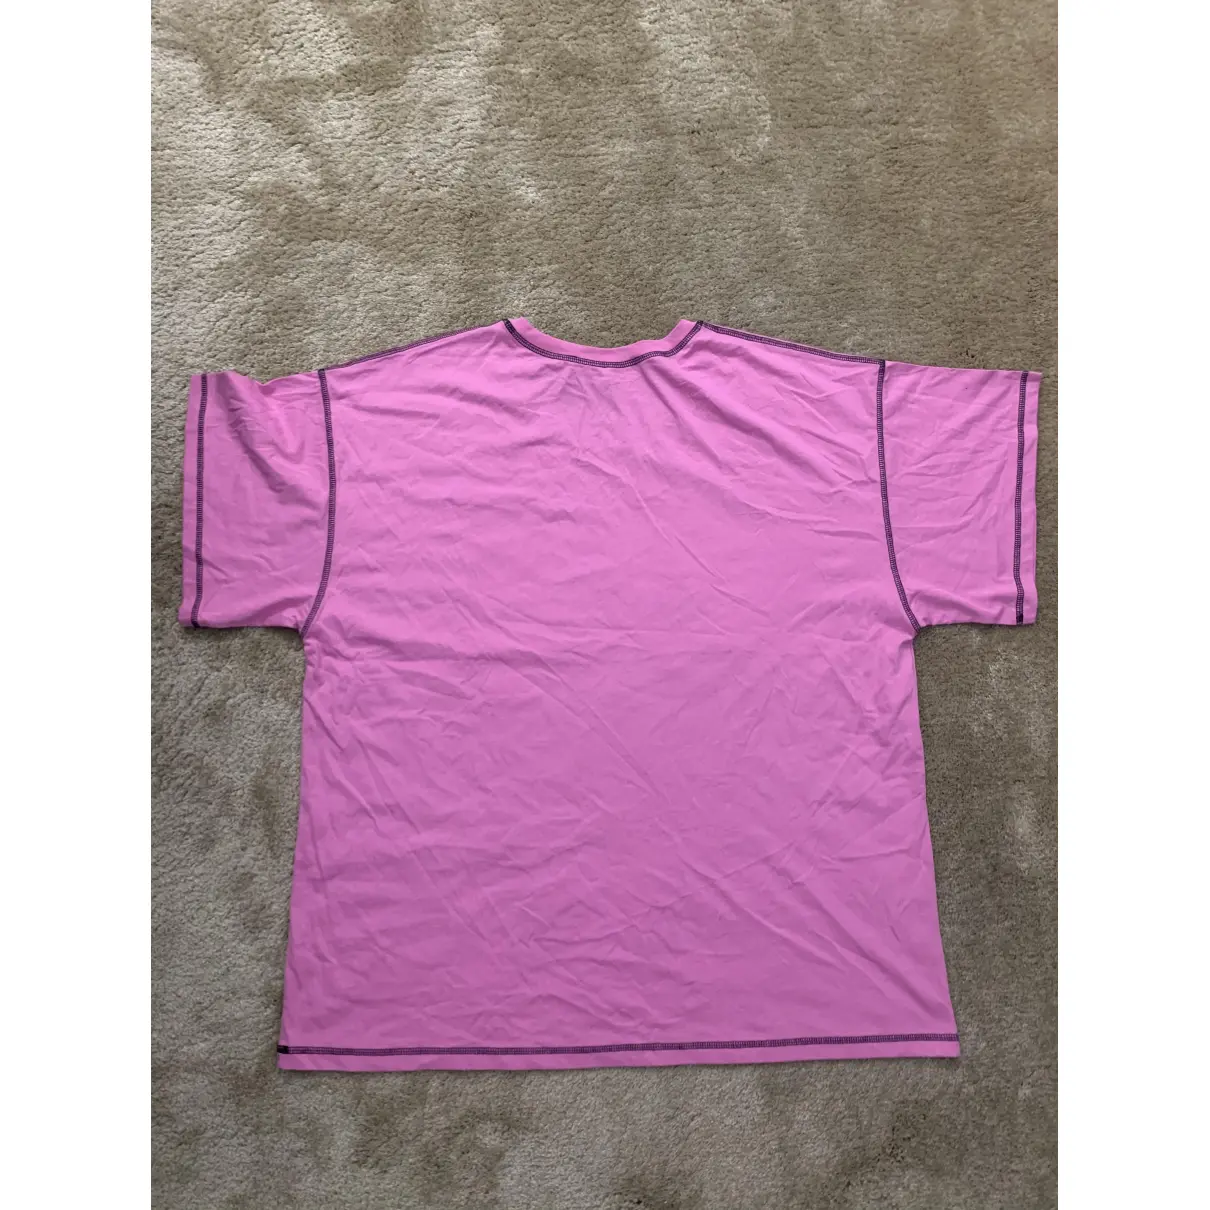 Buy Jeremy Scott Pink Cotton T-shirt online